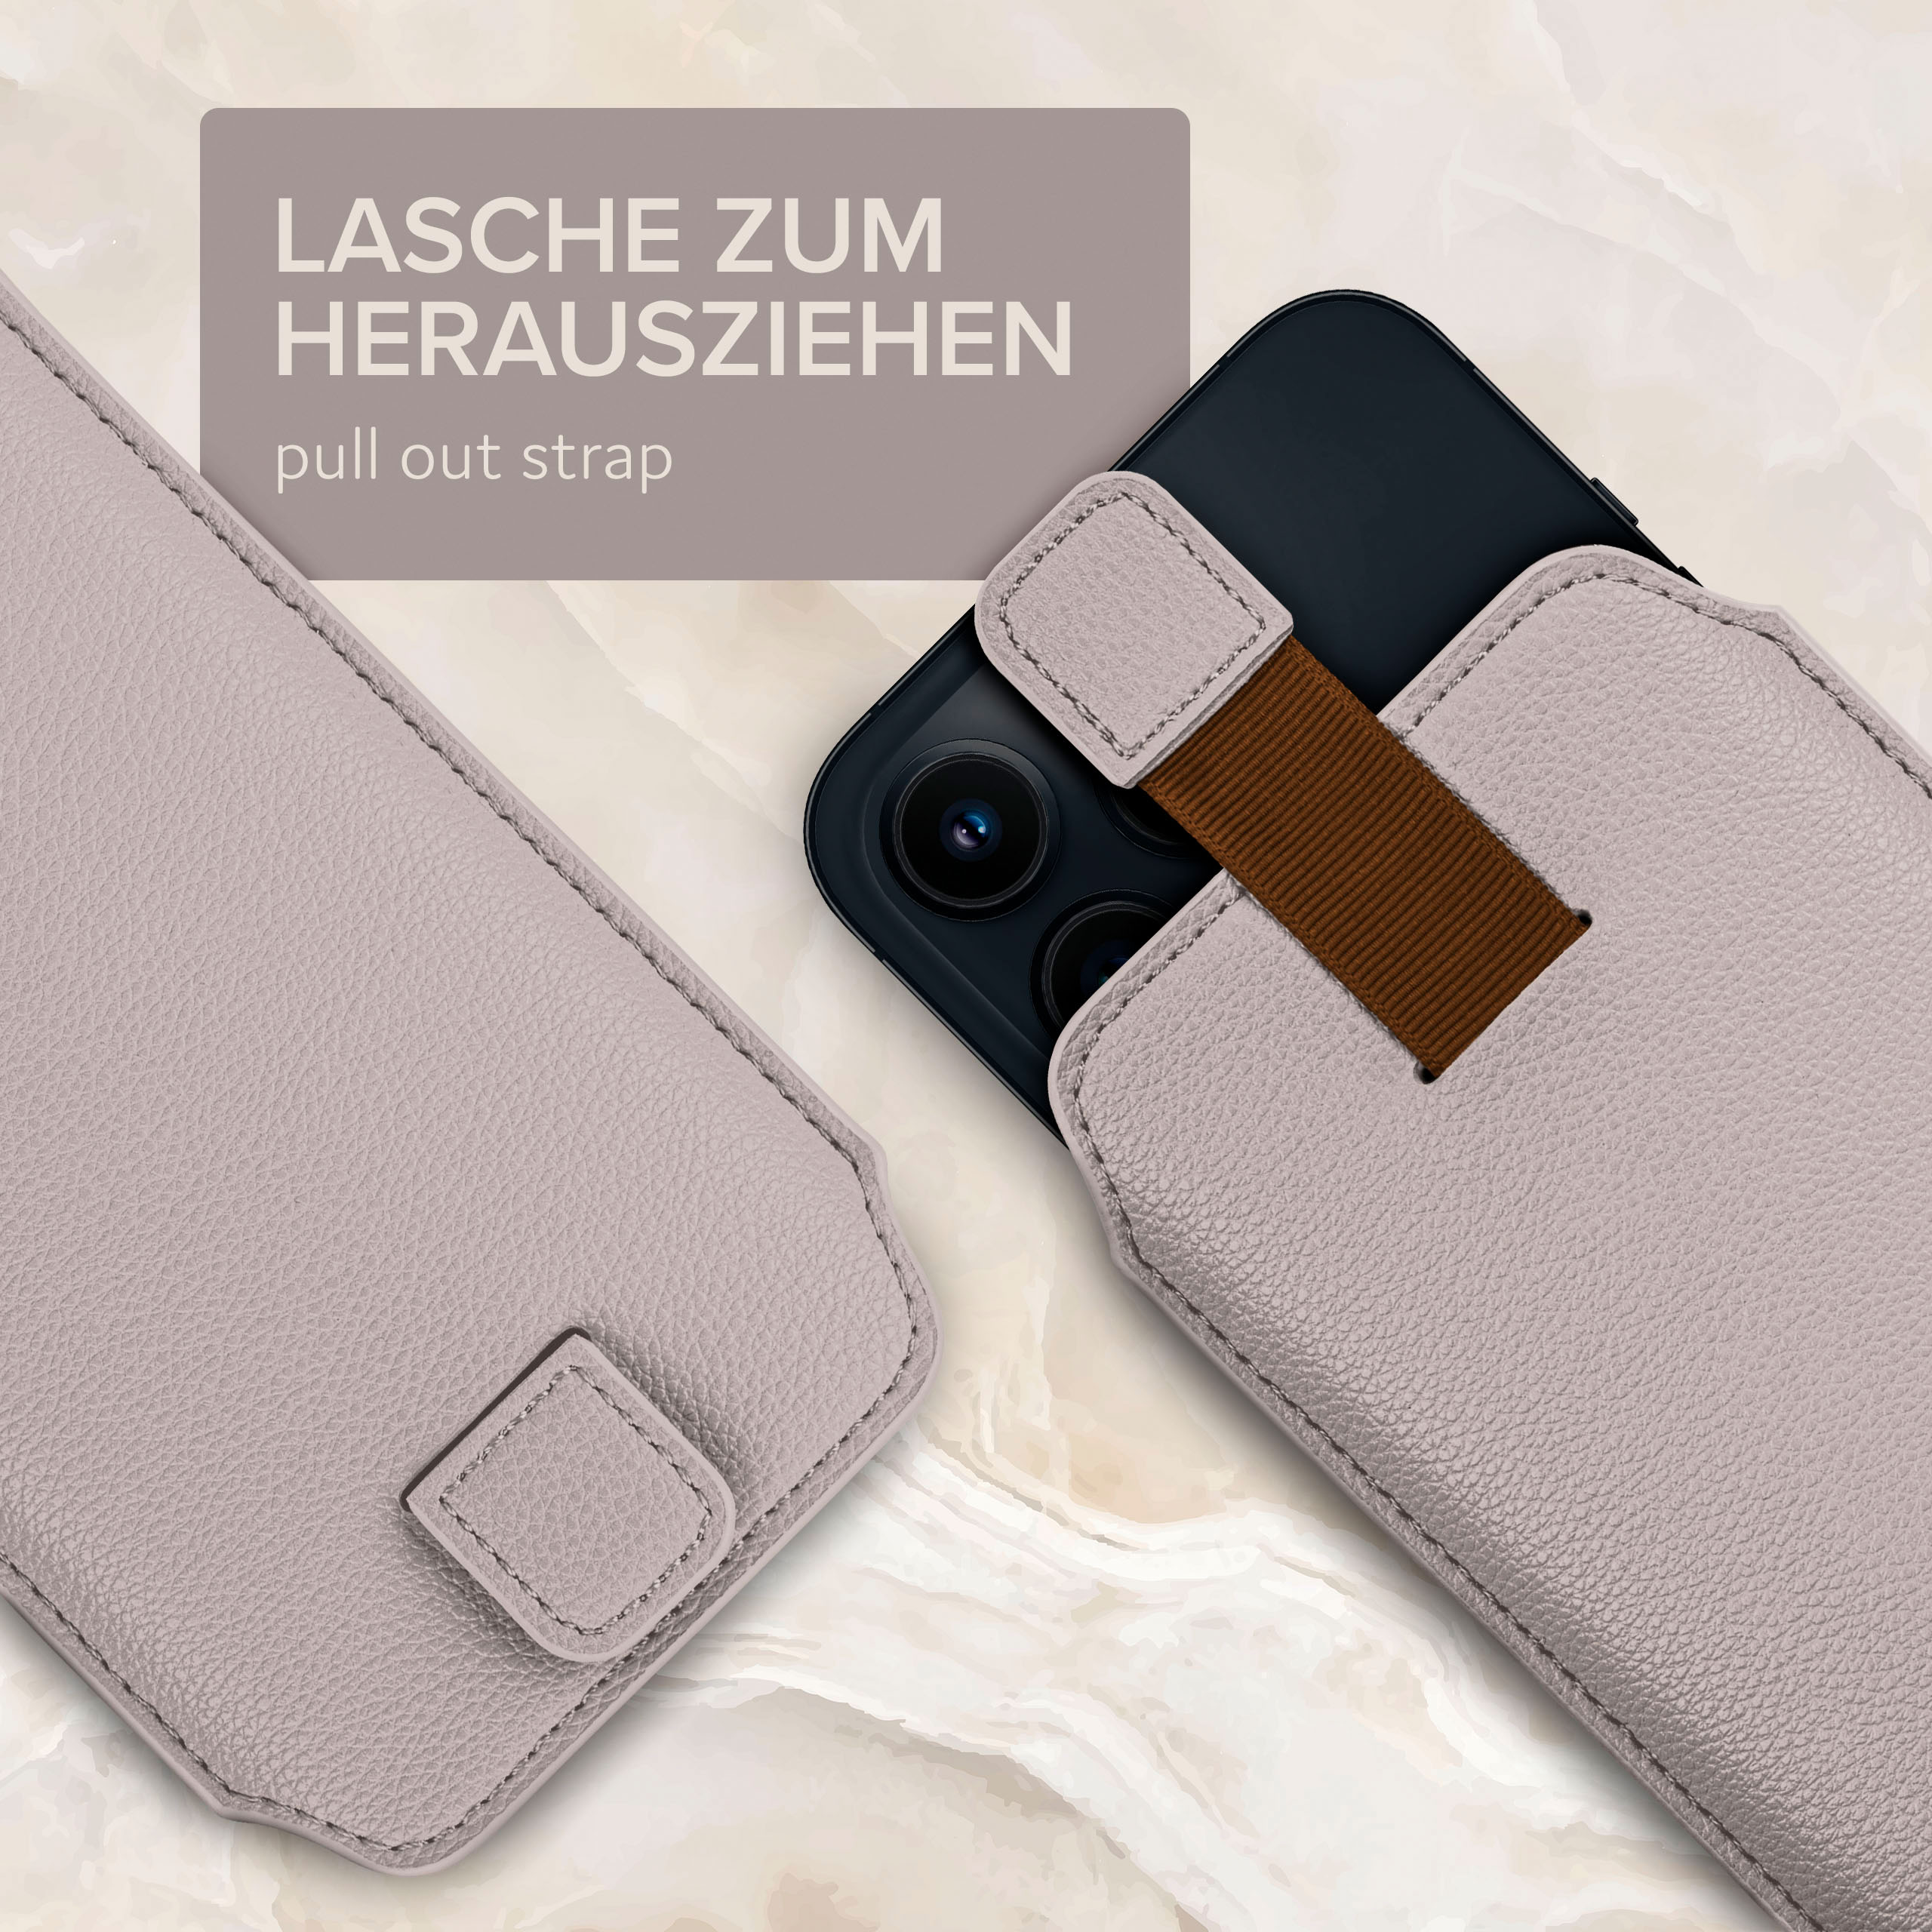 Pro Zuglasche, Einsteckhülle Pro/P30 Hellgrau P30 New Huawei, mit Ed, Full ONEFLOW Cover,